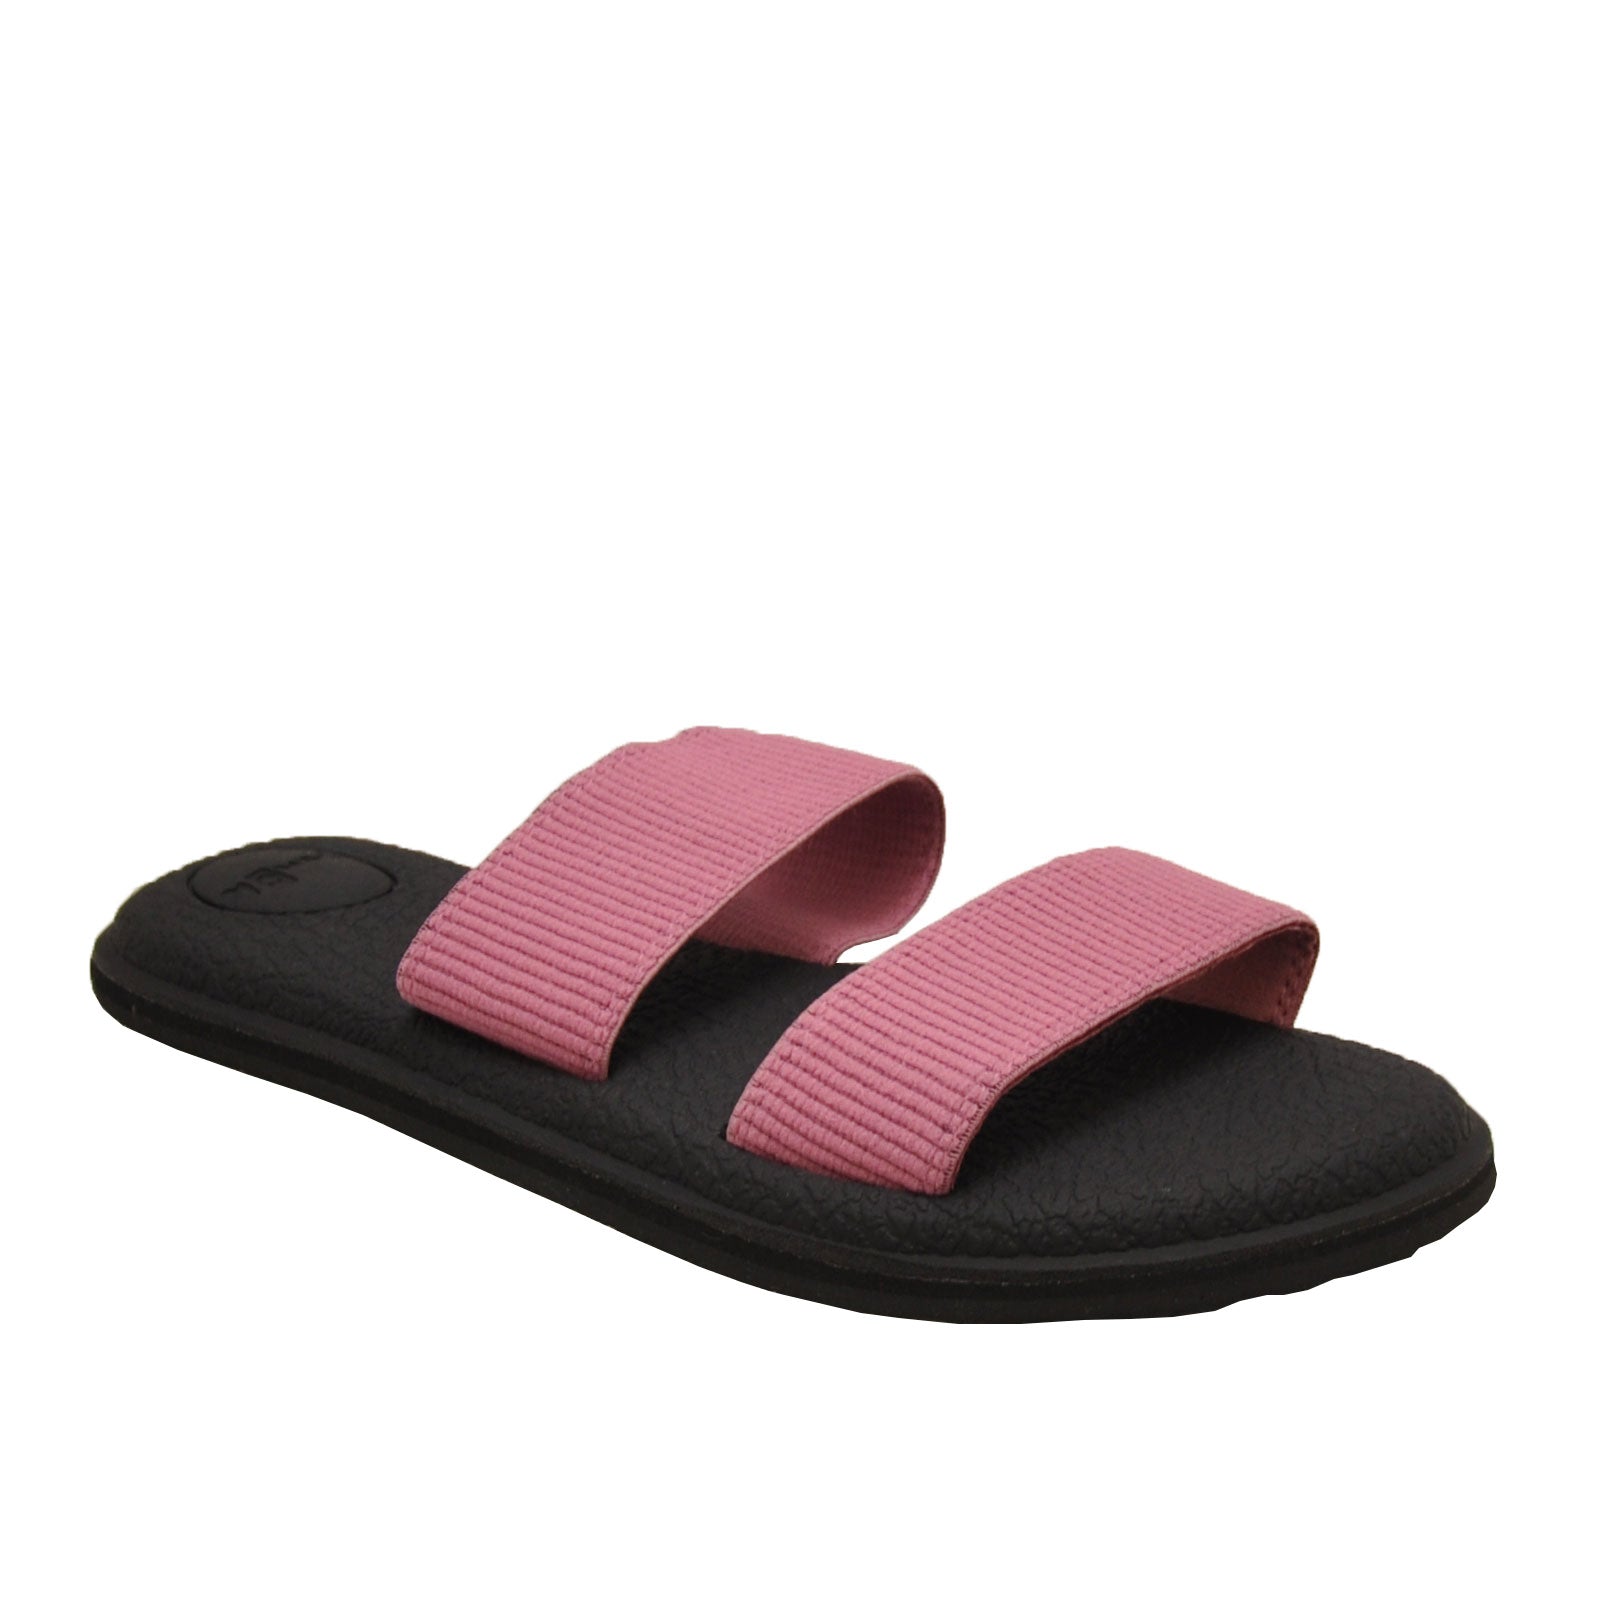 Sanuk Yoga Sling Sandals Flip Flops Size 8 Womens Pink